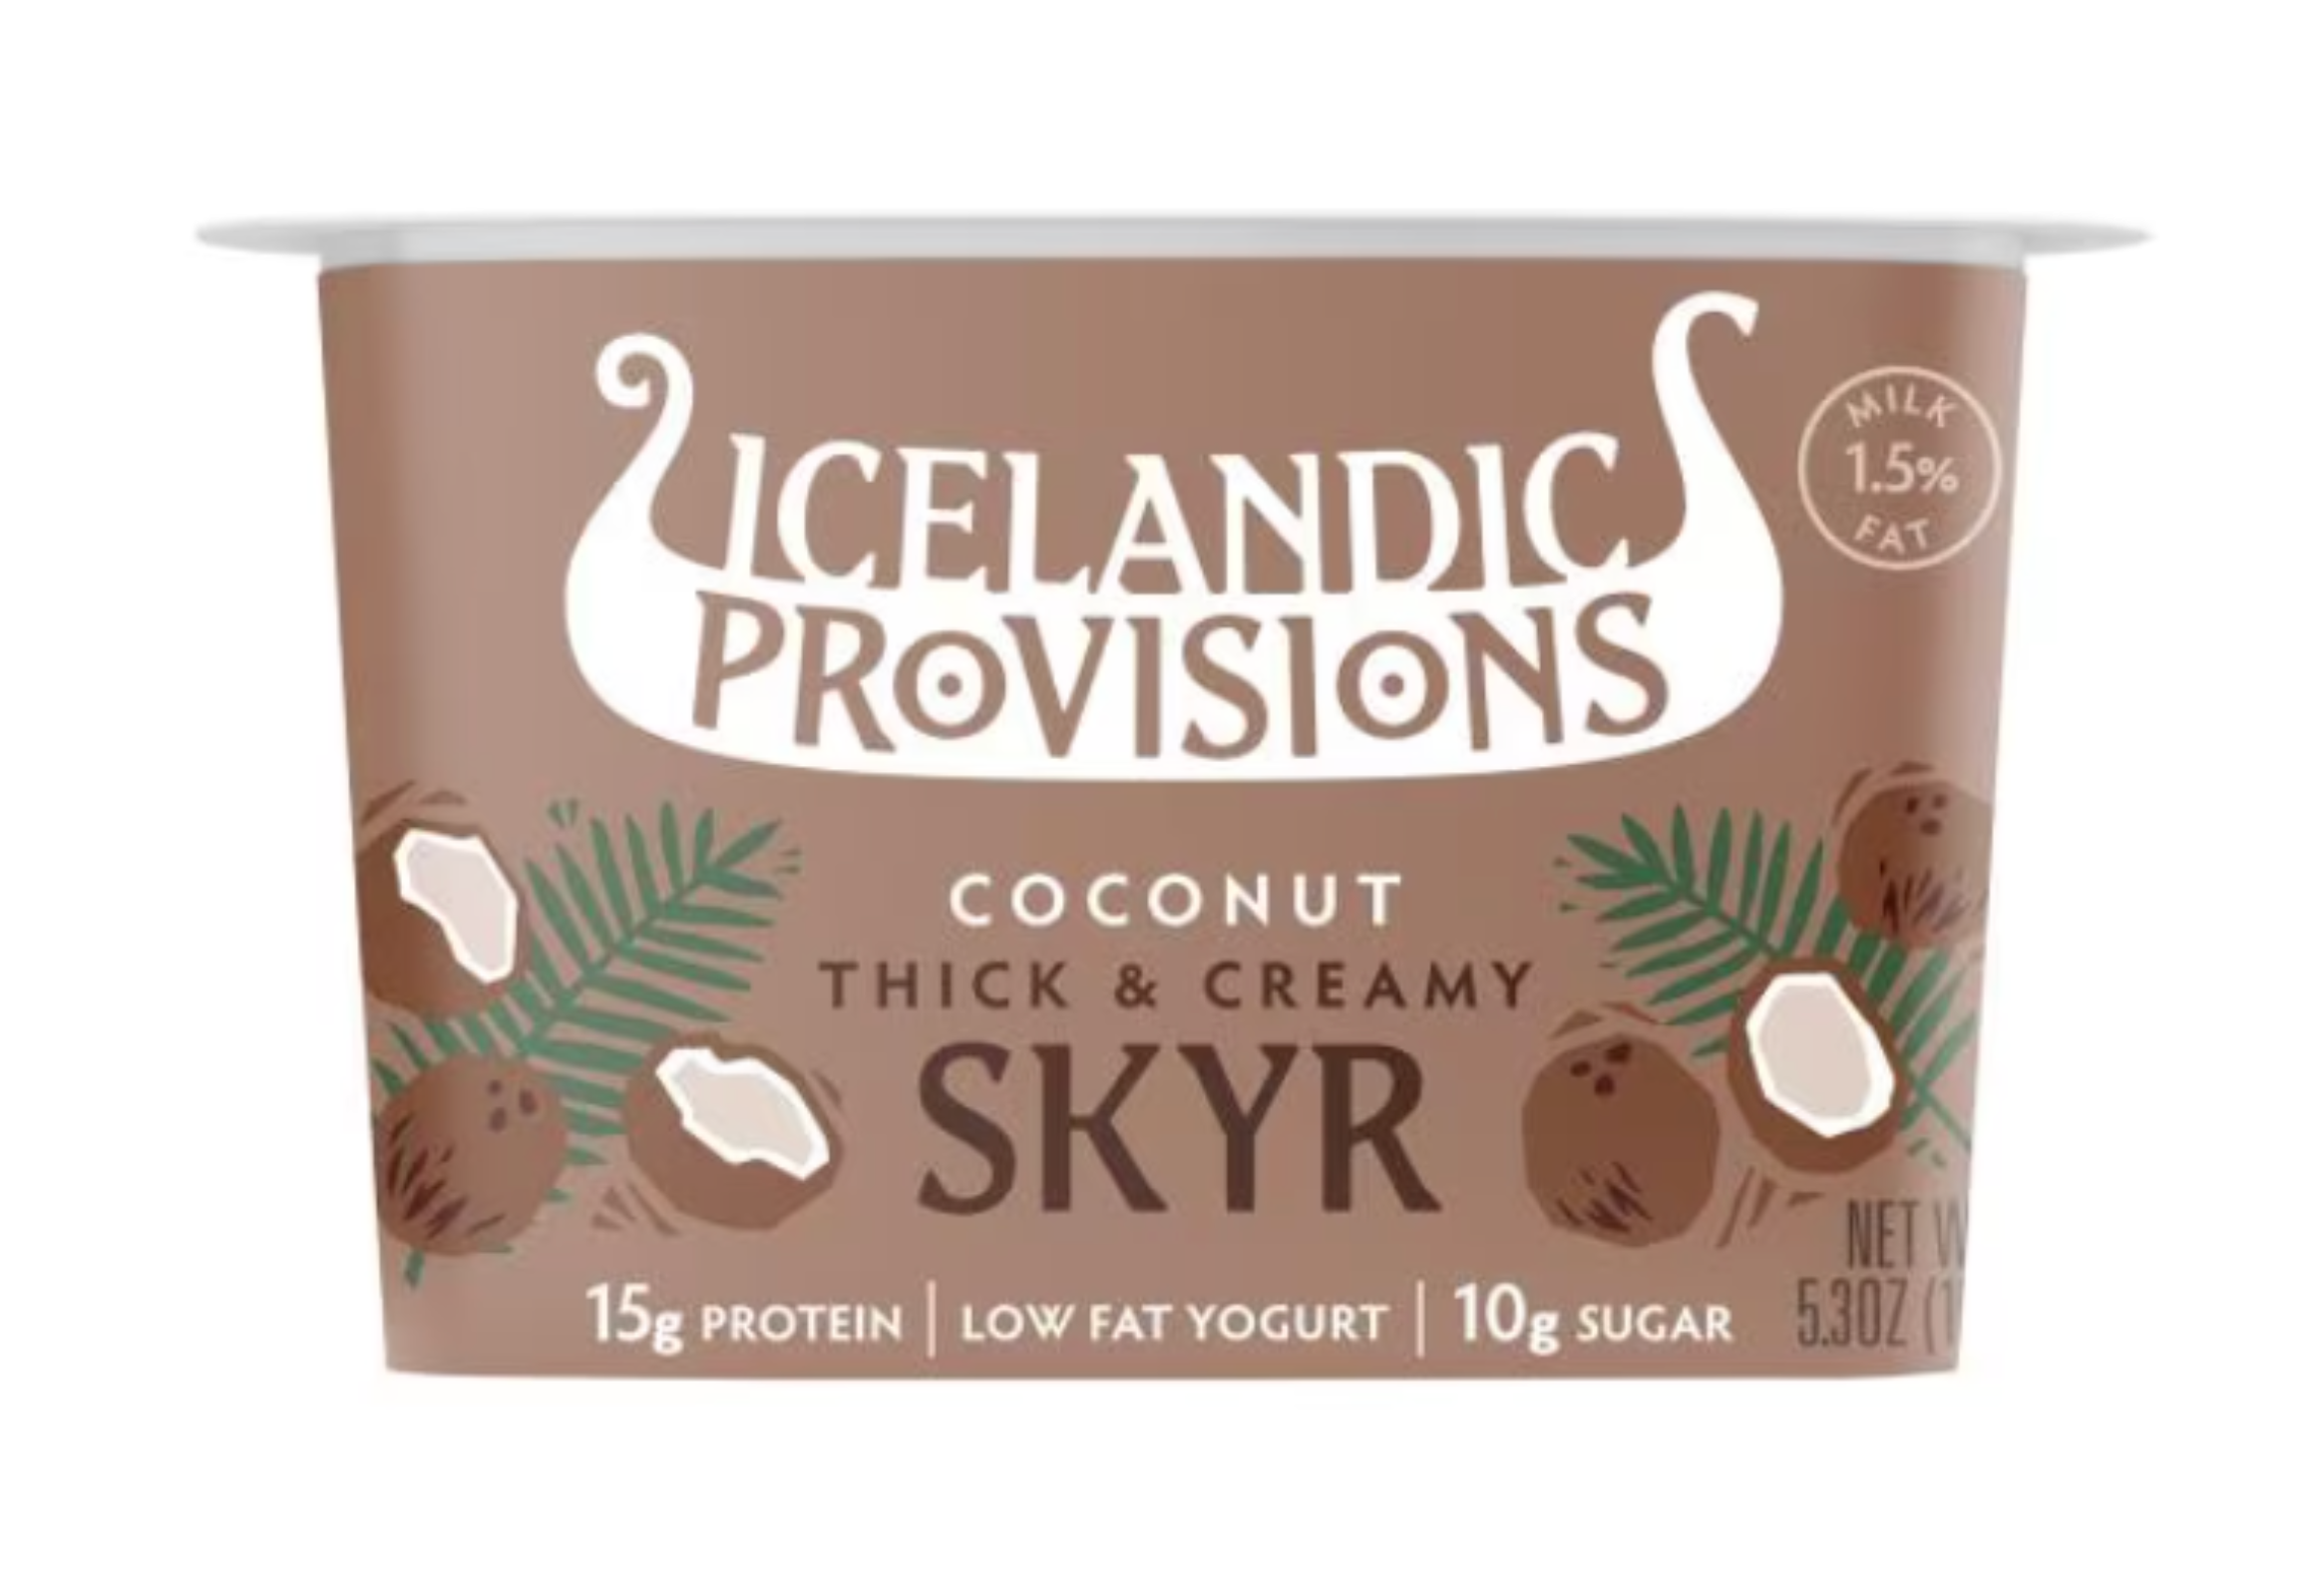 2 Icelandic Provisions Yogurt